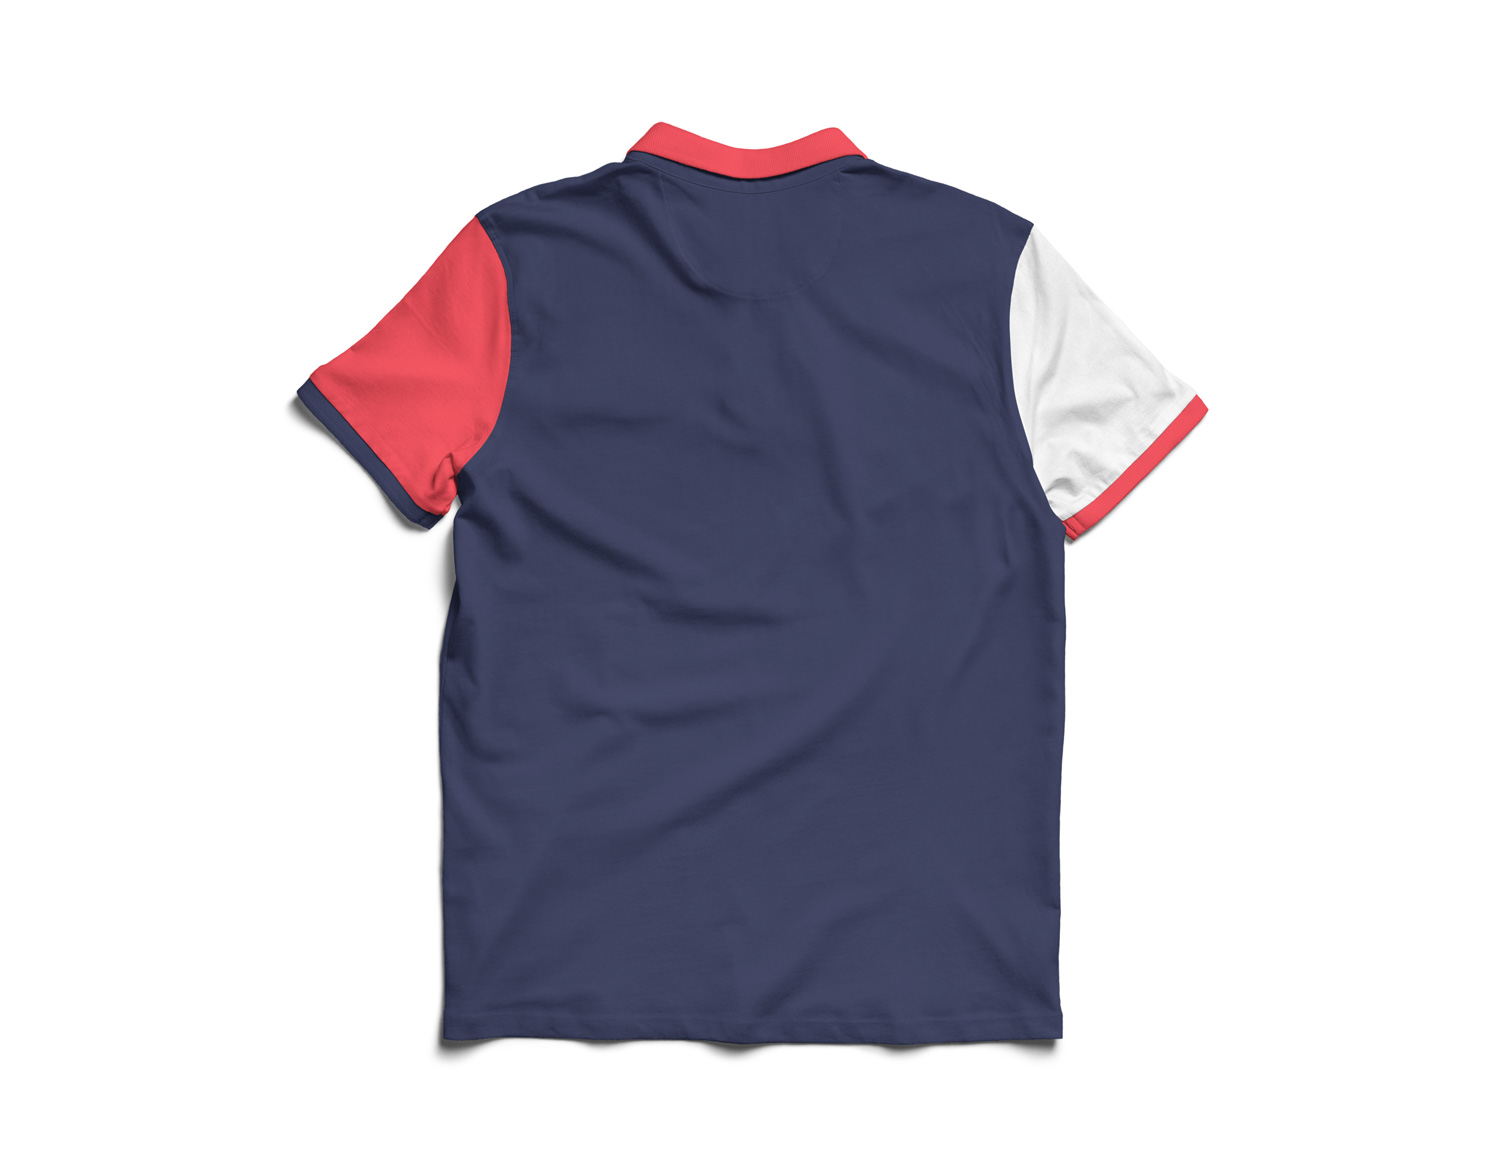 Polo Shirt Mockup | Free Mockup